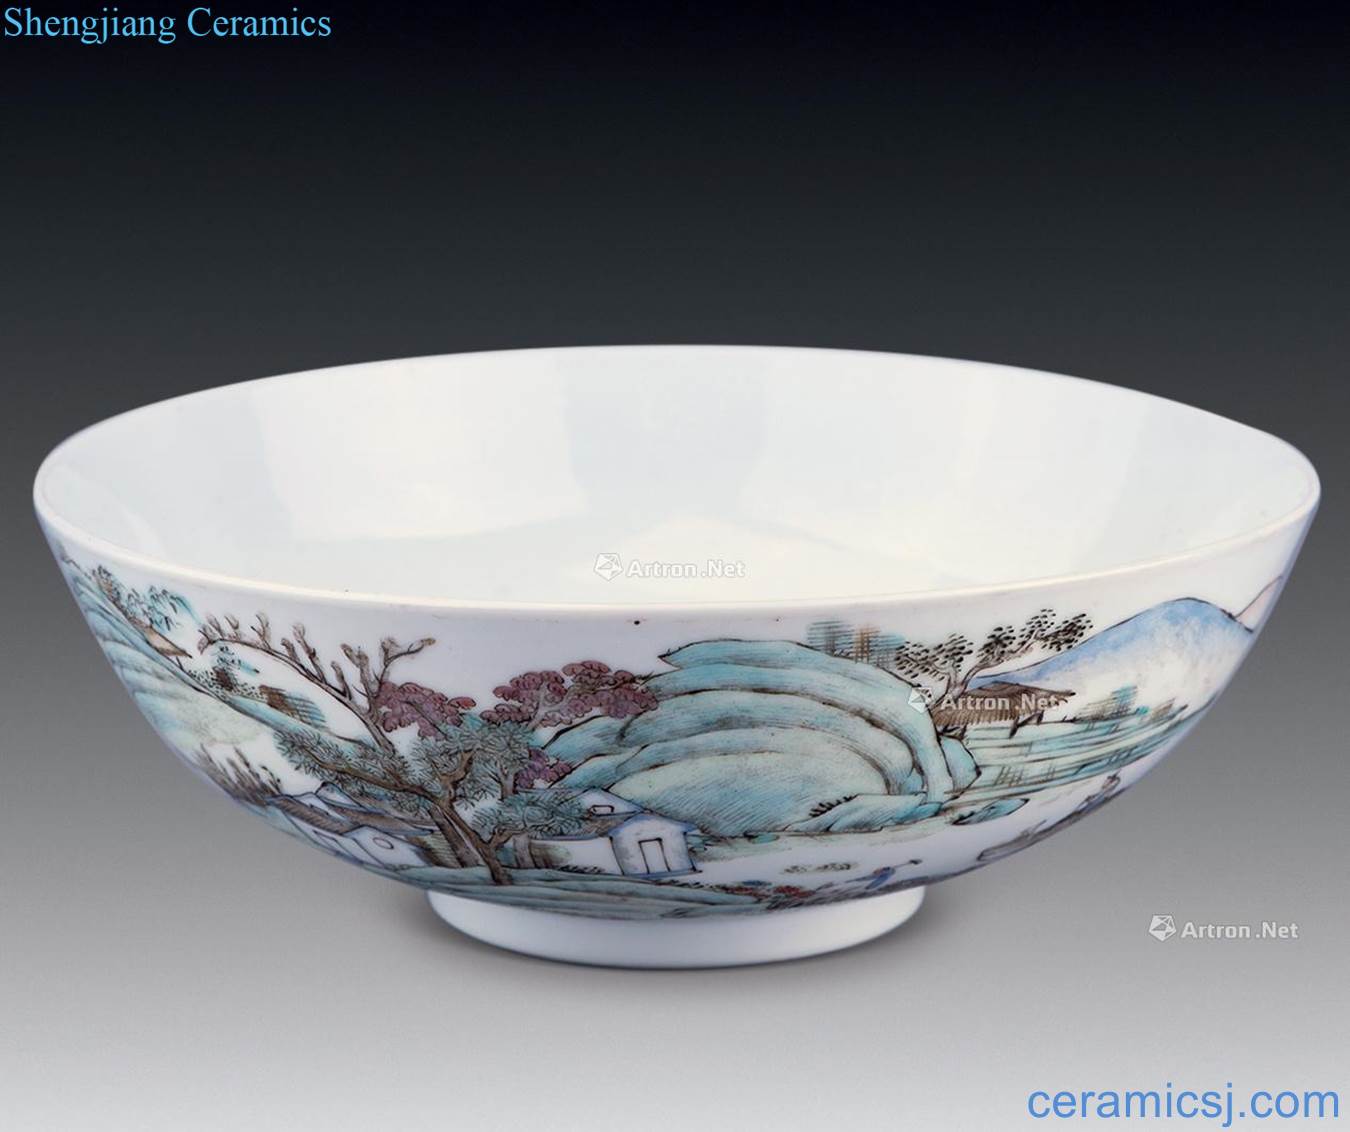 Clear pastel landscape character scene bowl